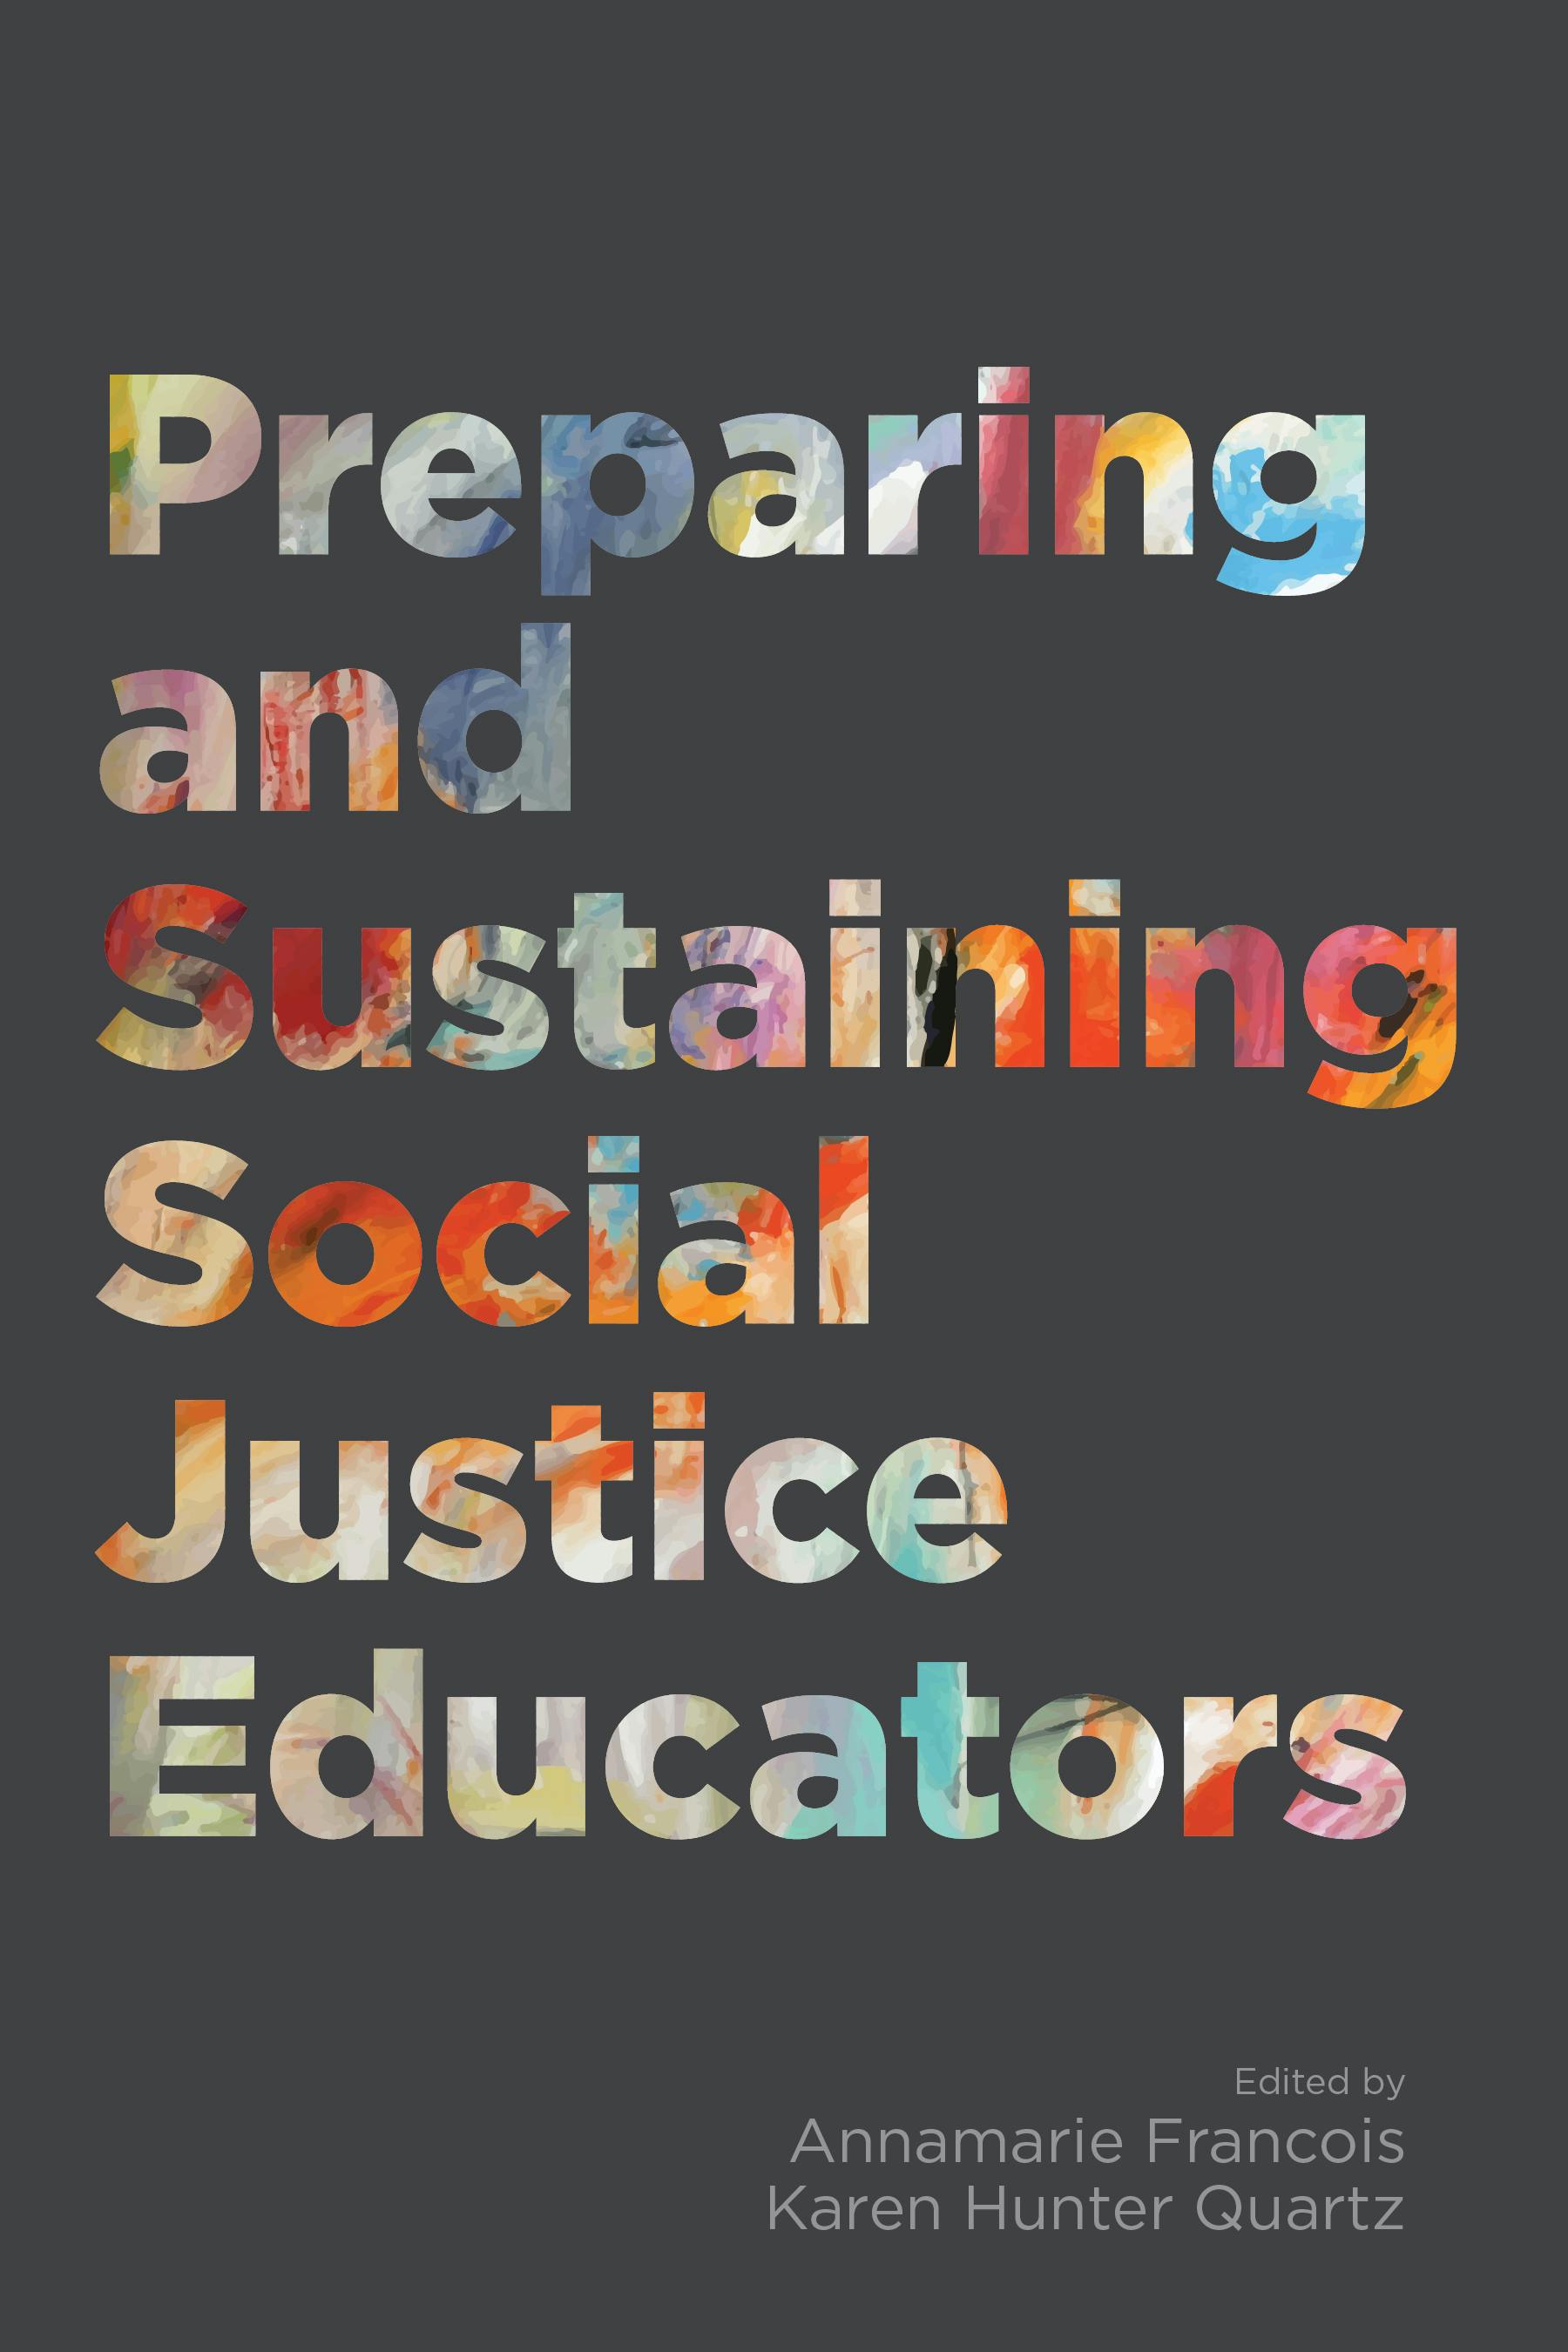 Book Cover of Preparing and Sustaining Social Justice Educators - Edited by Annamarie Francois and Karen Hunter Quartz